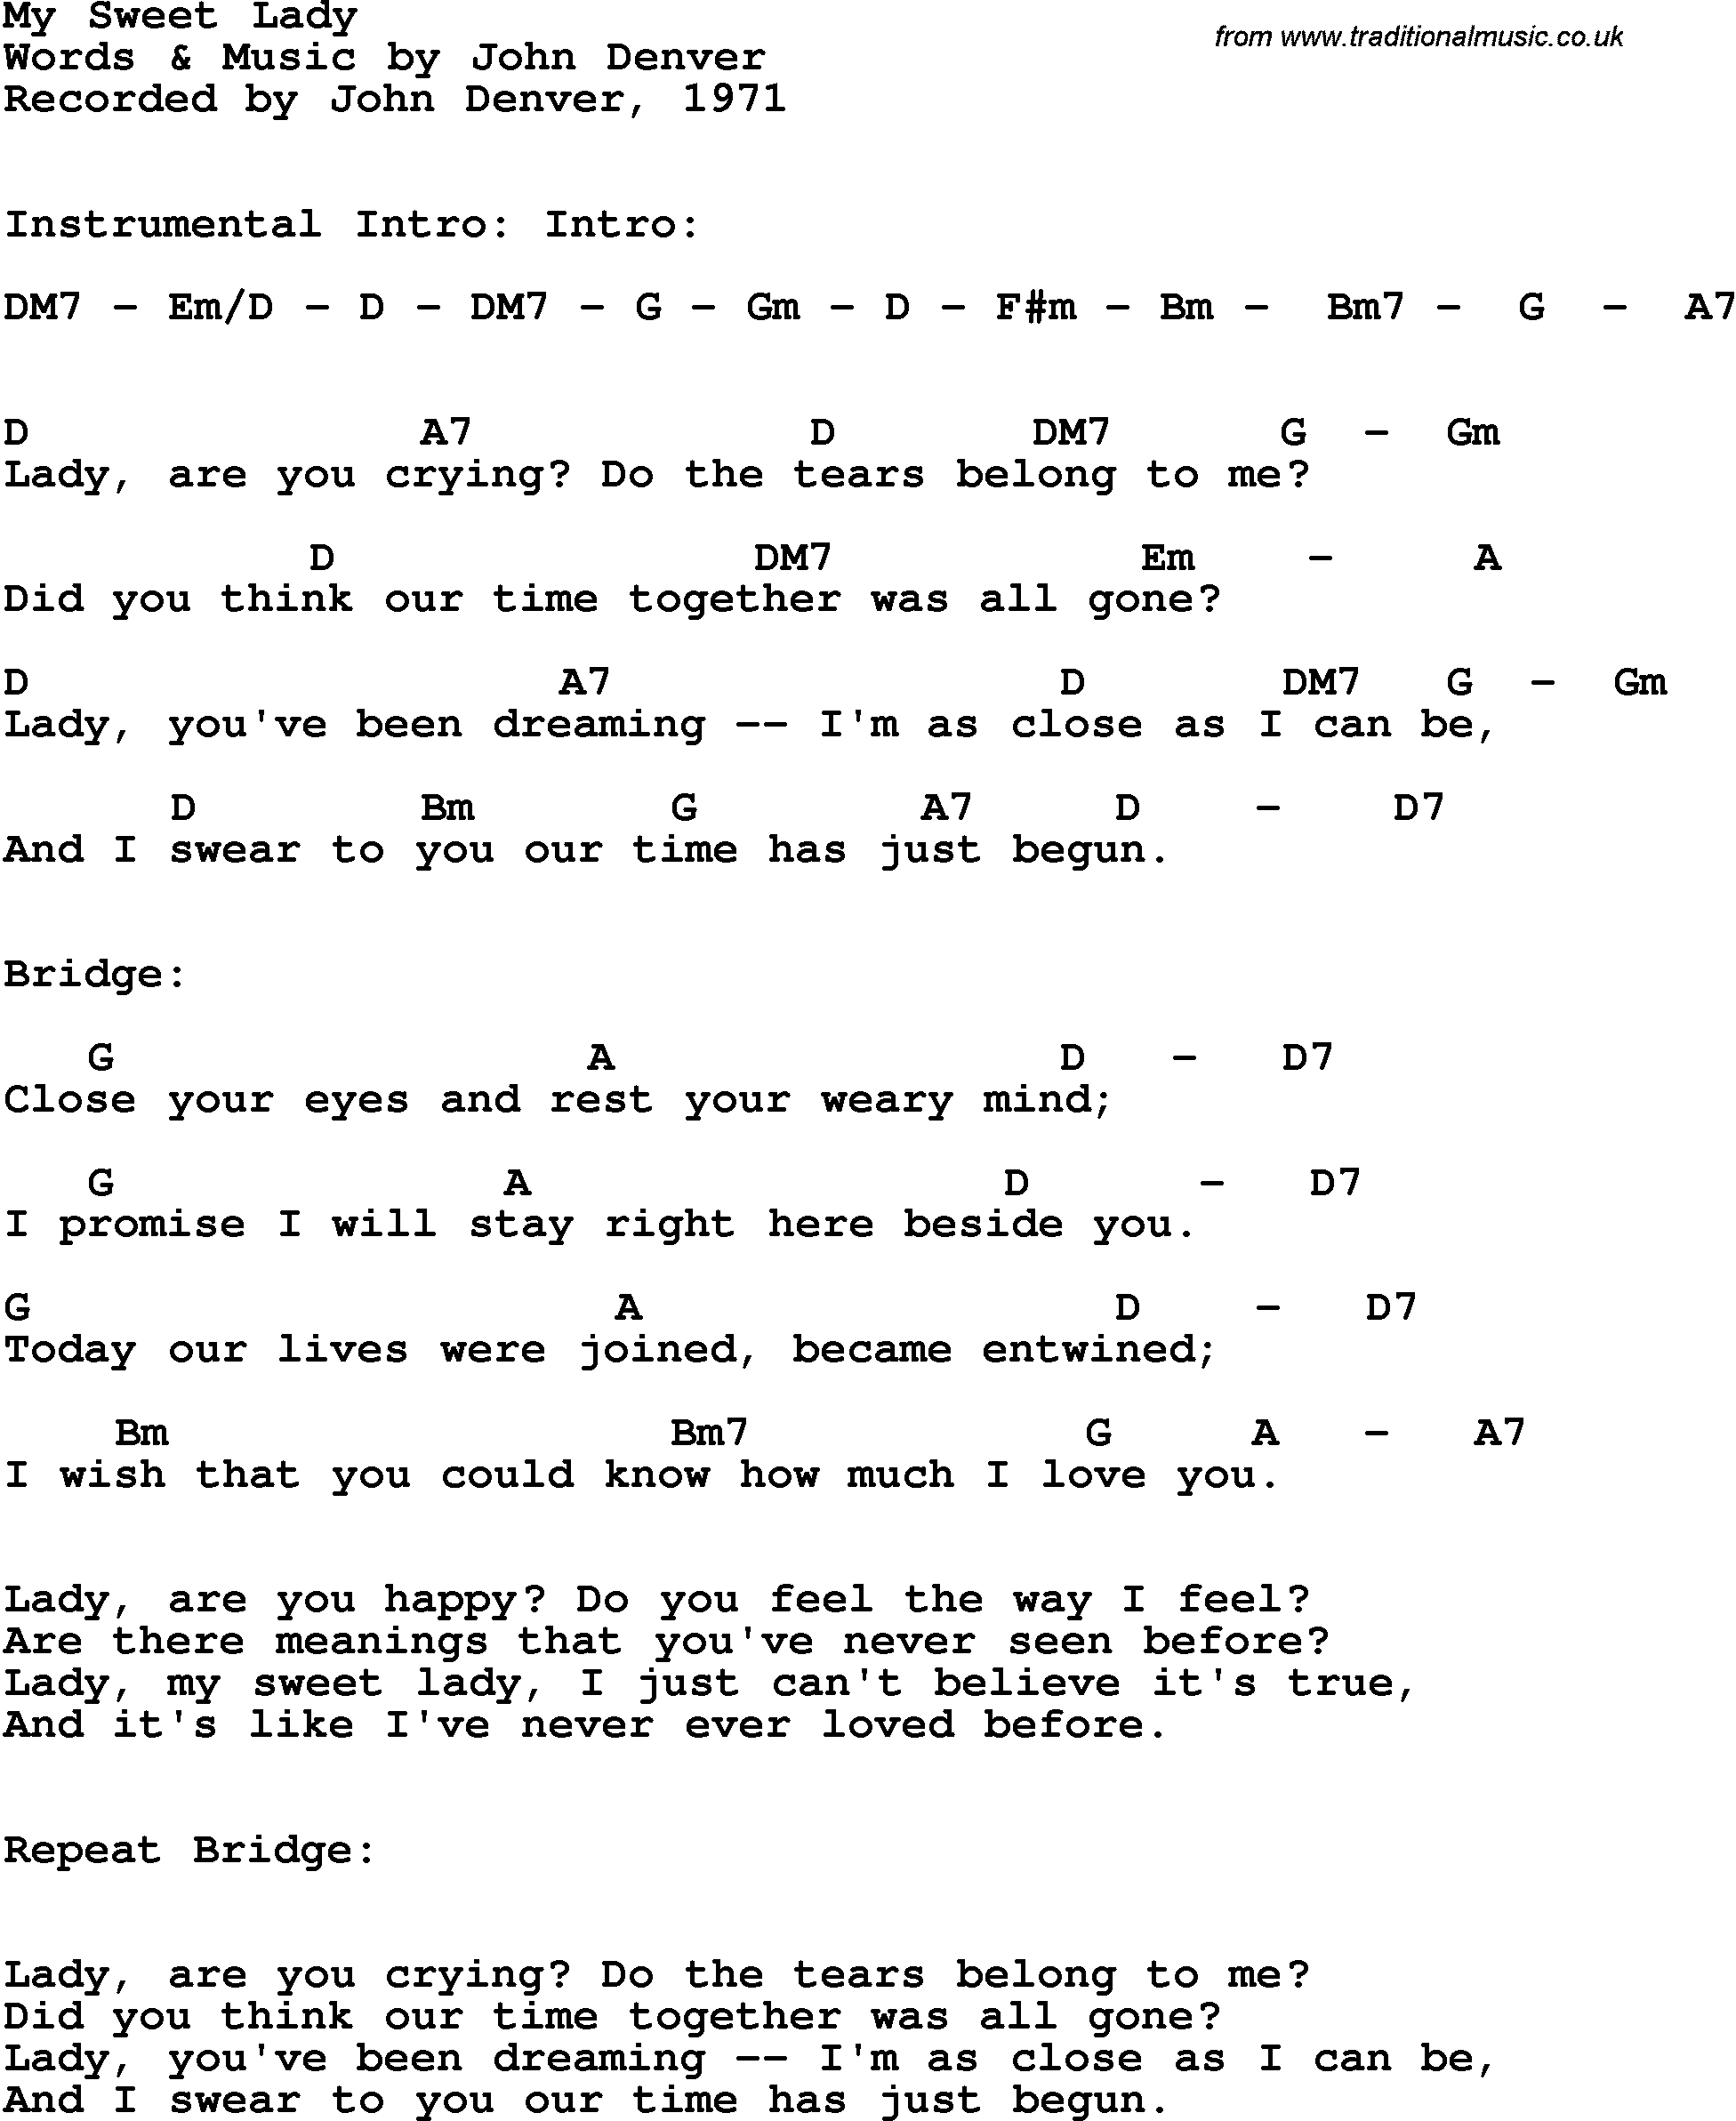 Song Lyrics with guitar chords for My Sweet Lady - John Denver, 1971